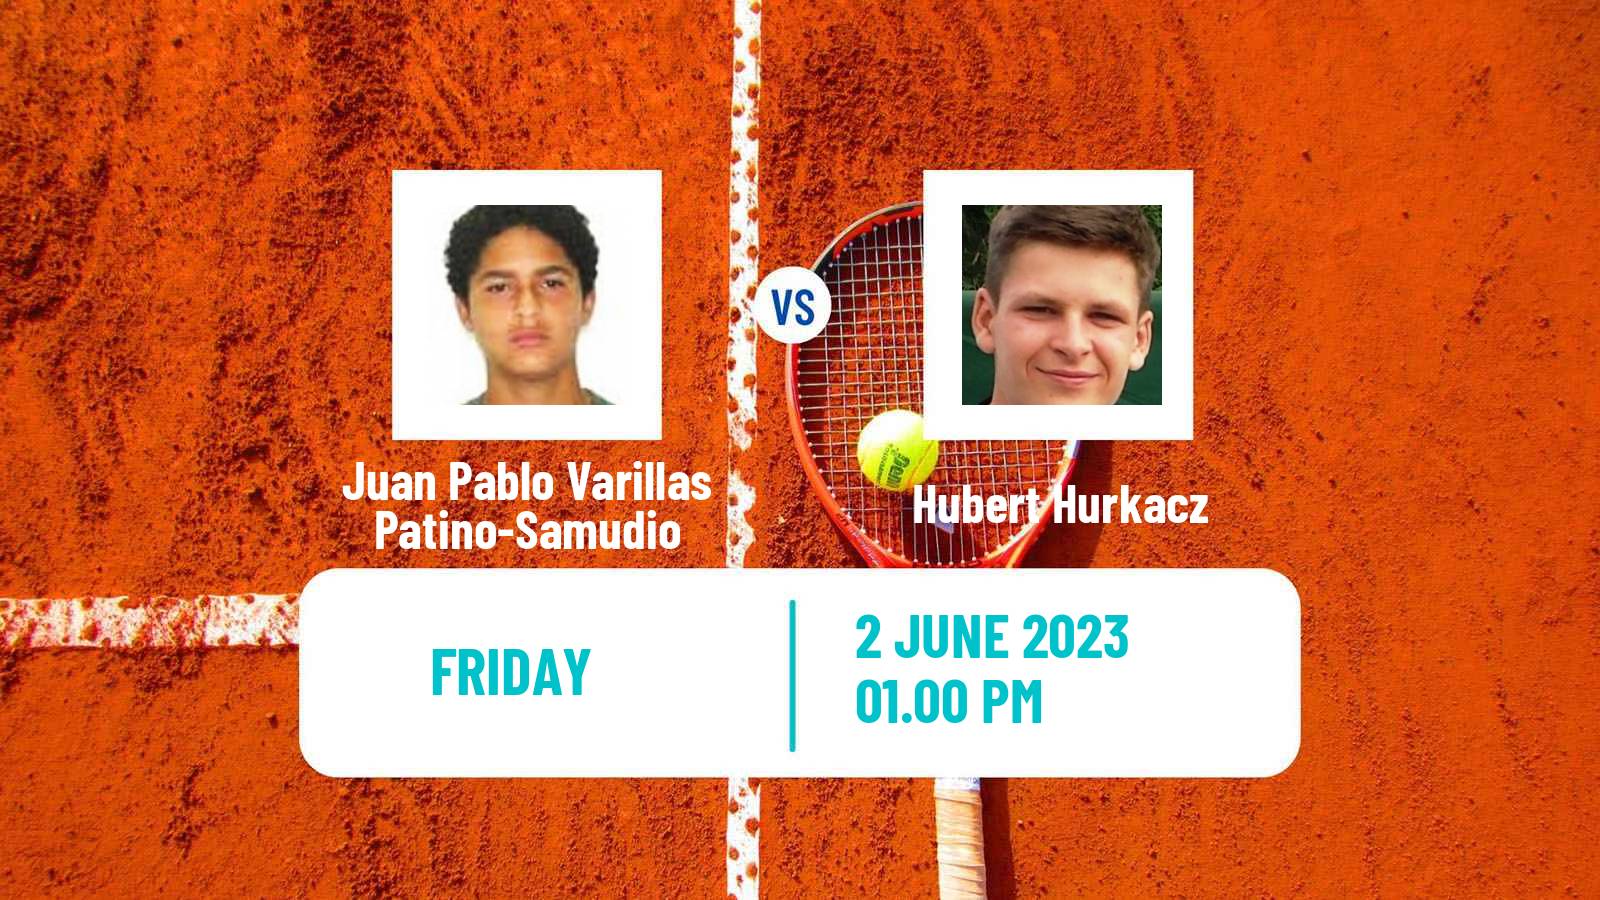 Tennis ATP Roland Garros Juan Pablo Varillas Patino-Samudio - Hubert Hurkacz